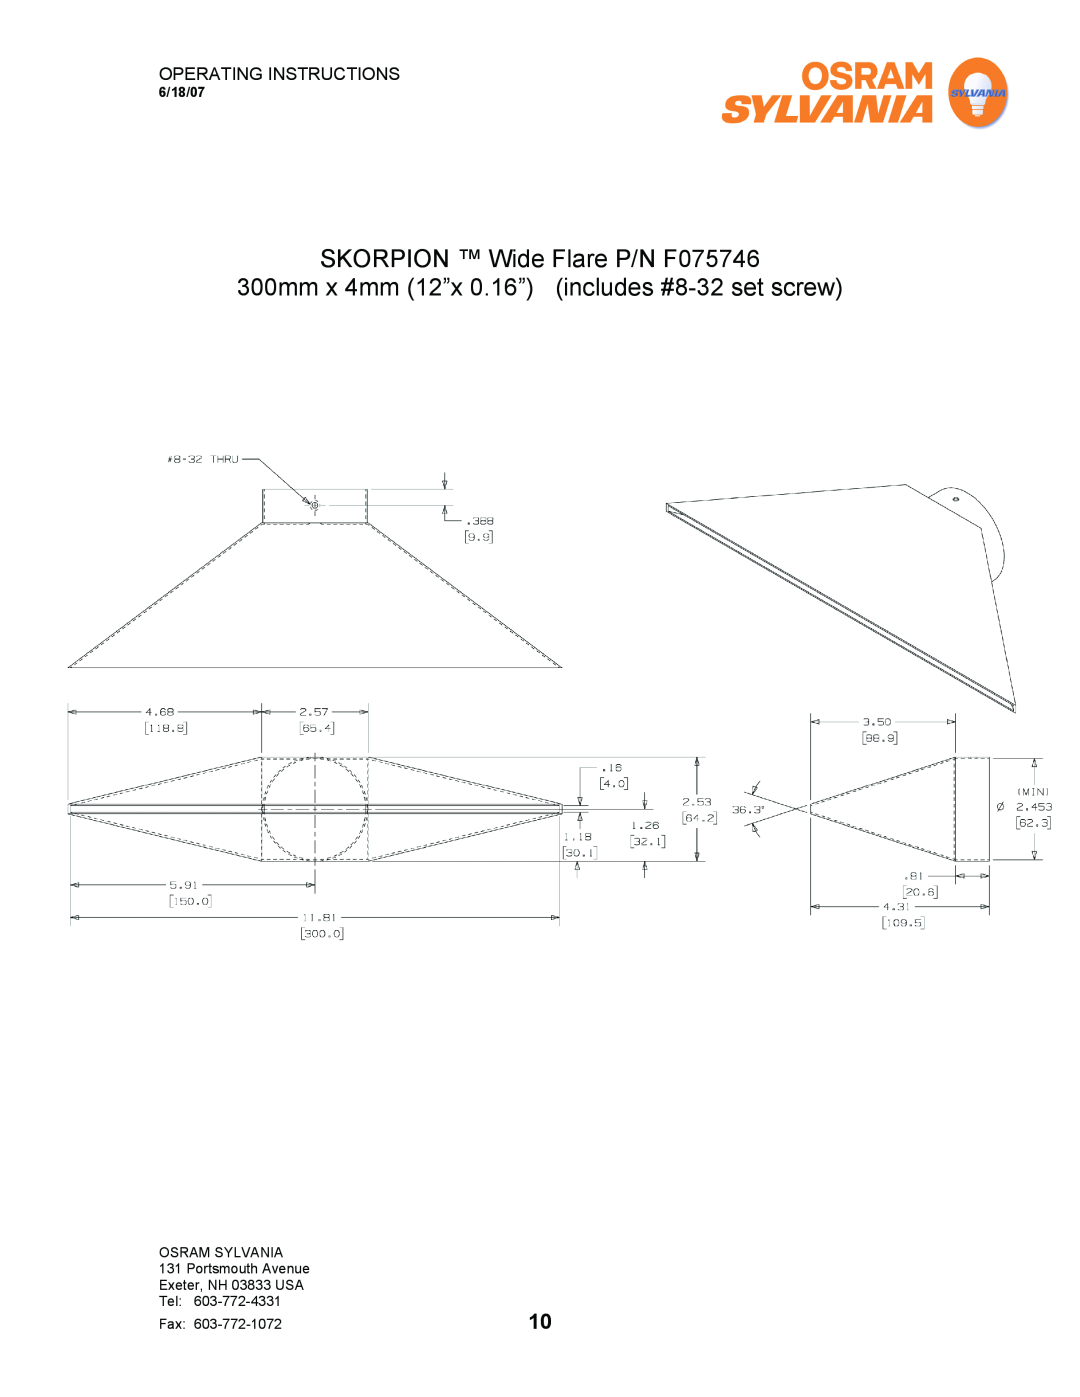 Sylvania F075615 SKORPION Wide Flare P/N F075746, 300mm x 4mm 12”x 0.16” includes #8-32set screw, Operating Instructions 